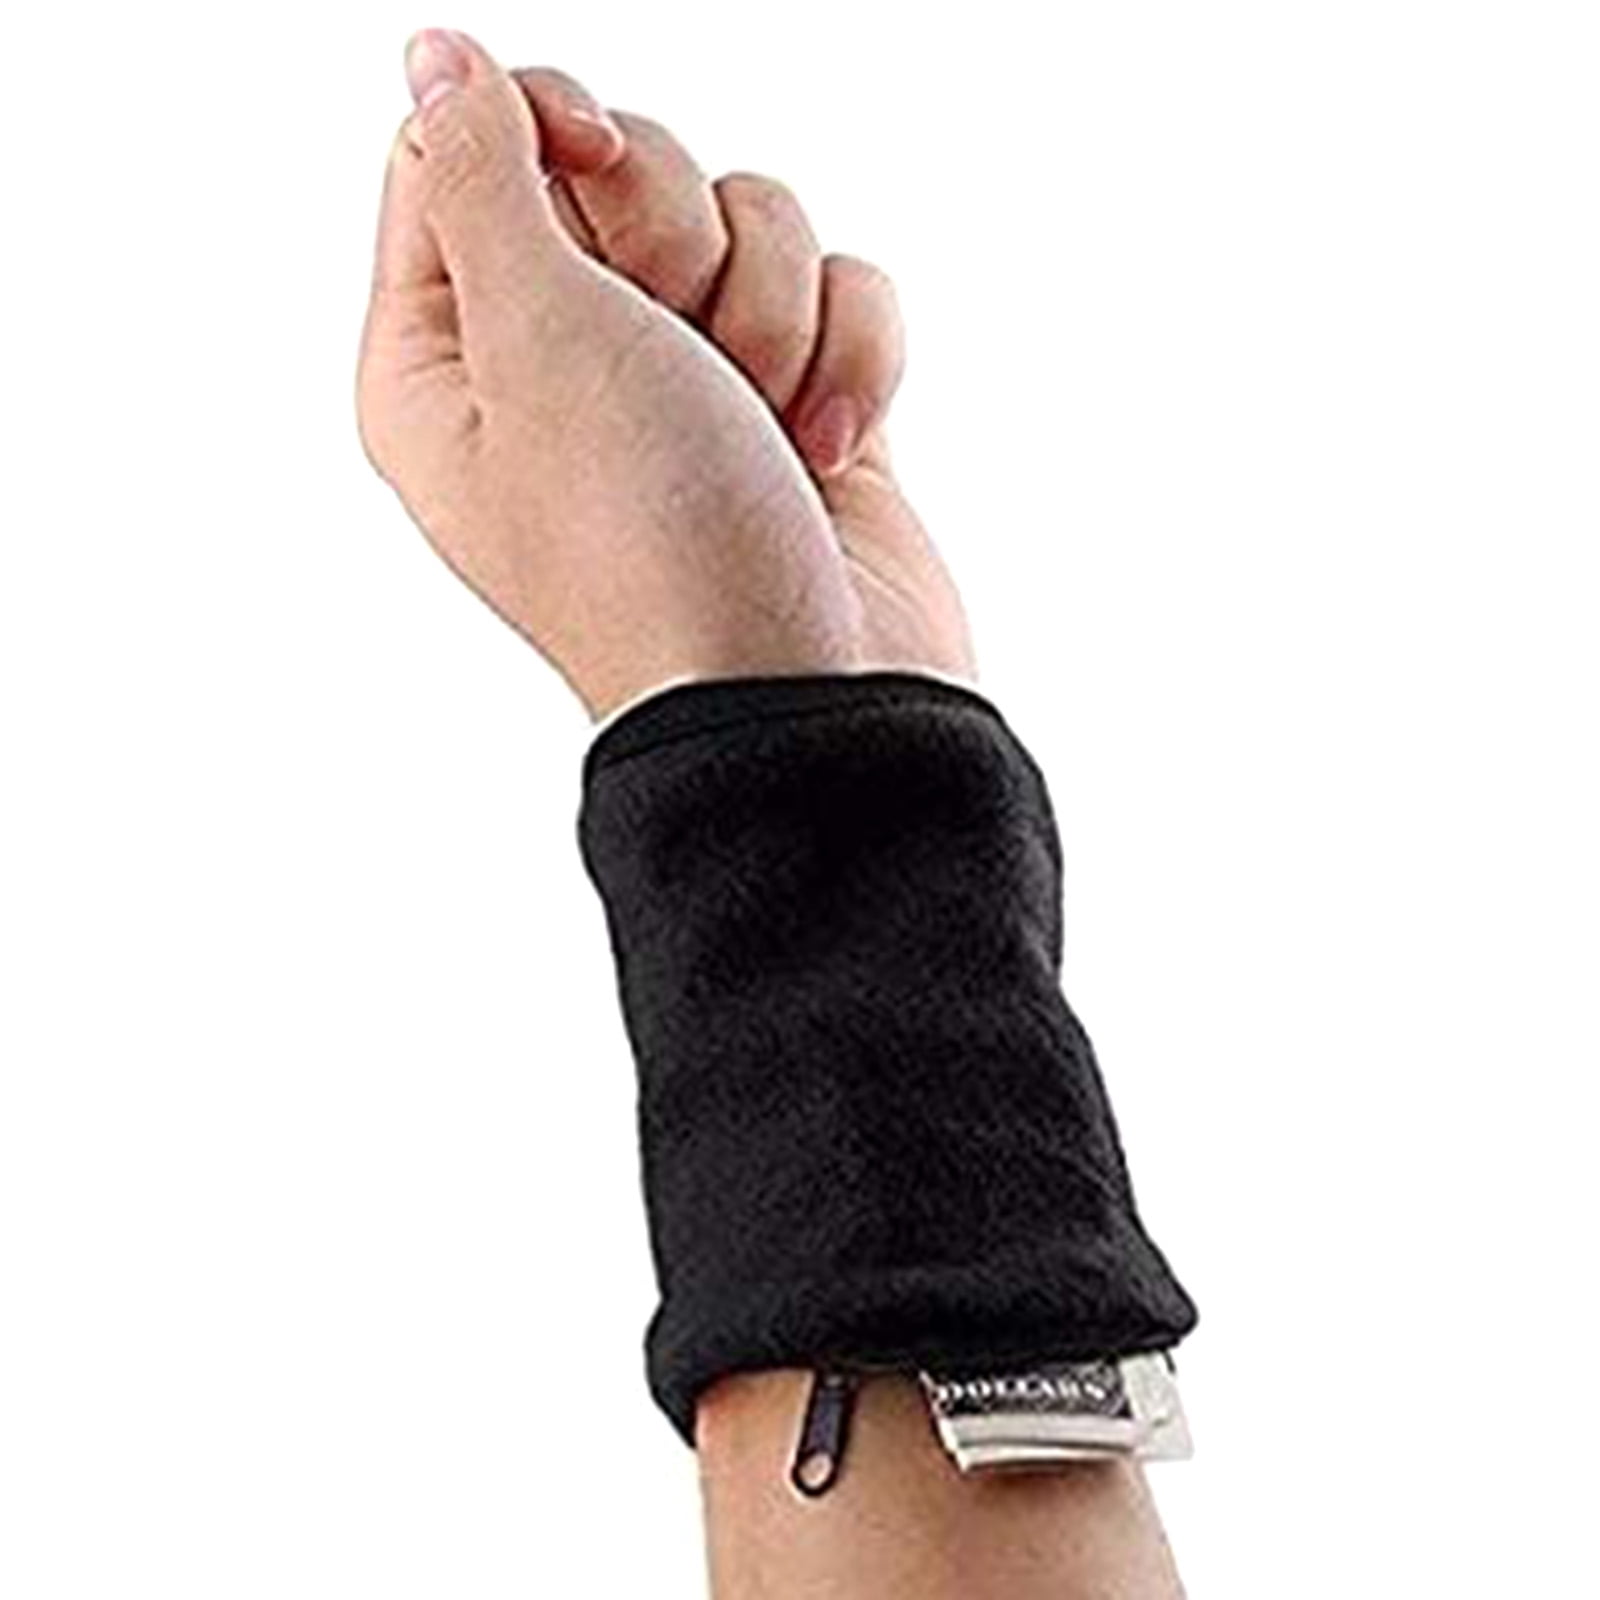  Arm Sweatband with water repellent zip pocket for keys  running walking etc.  money cards  Wristband cycling fitness Black Sweatband Sweatband 